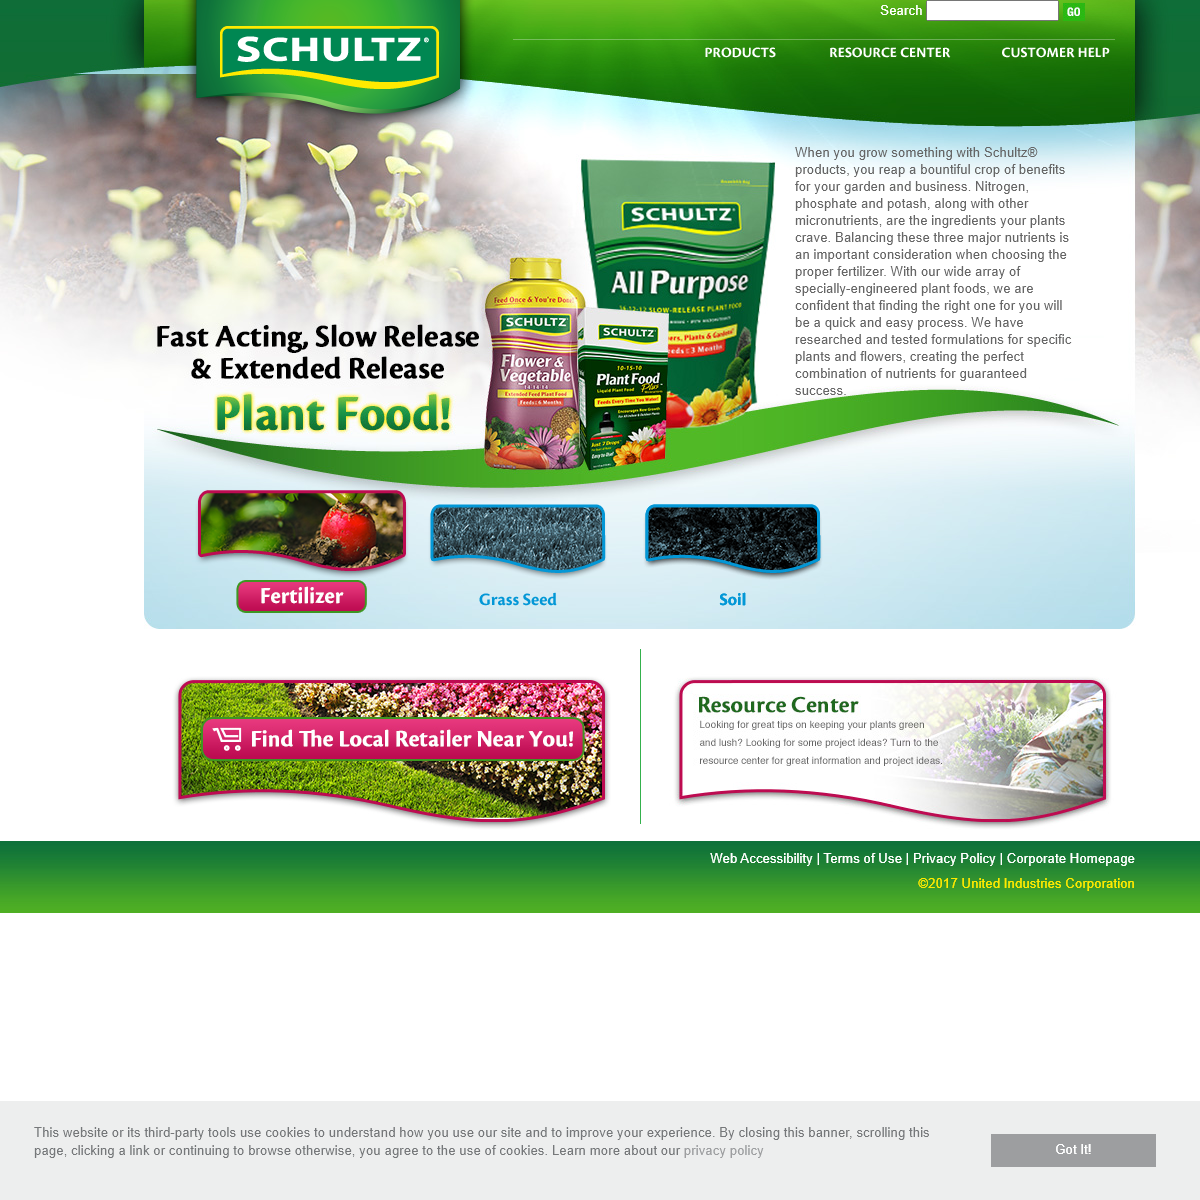 A complete backup of schultz.com